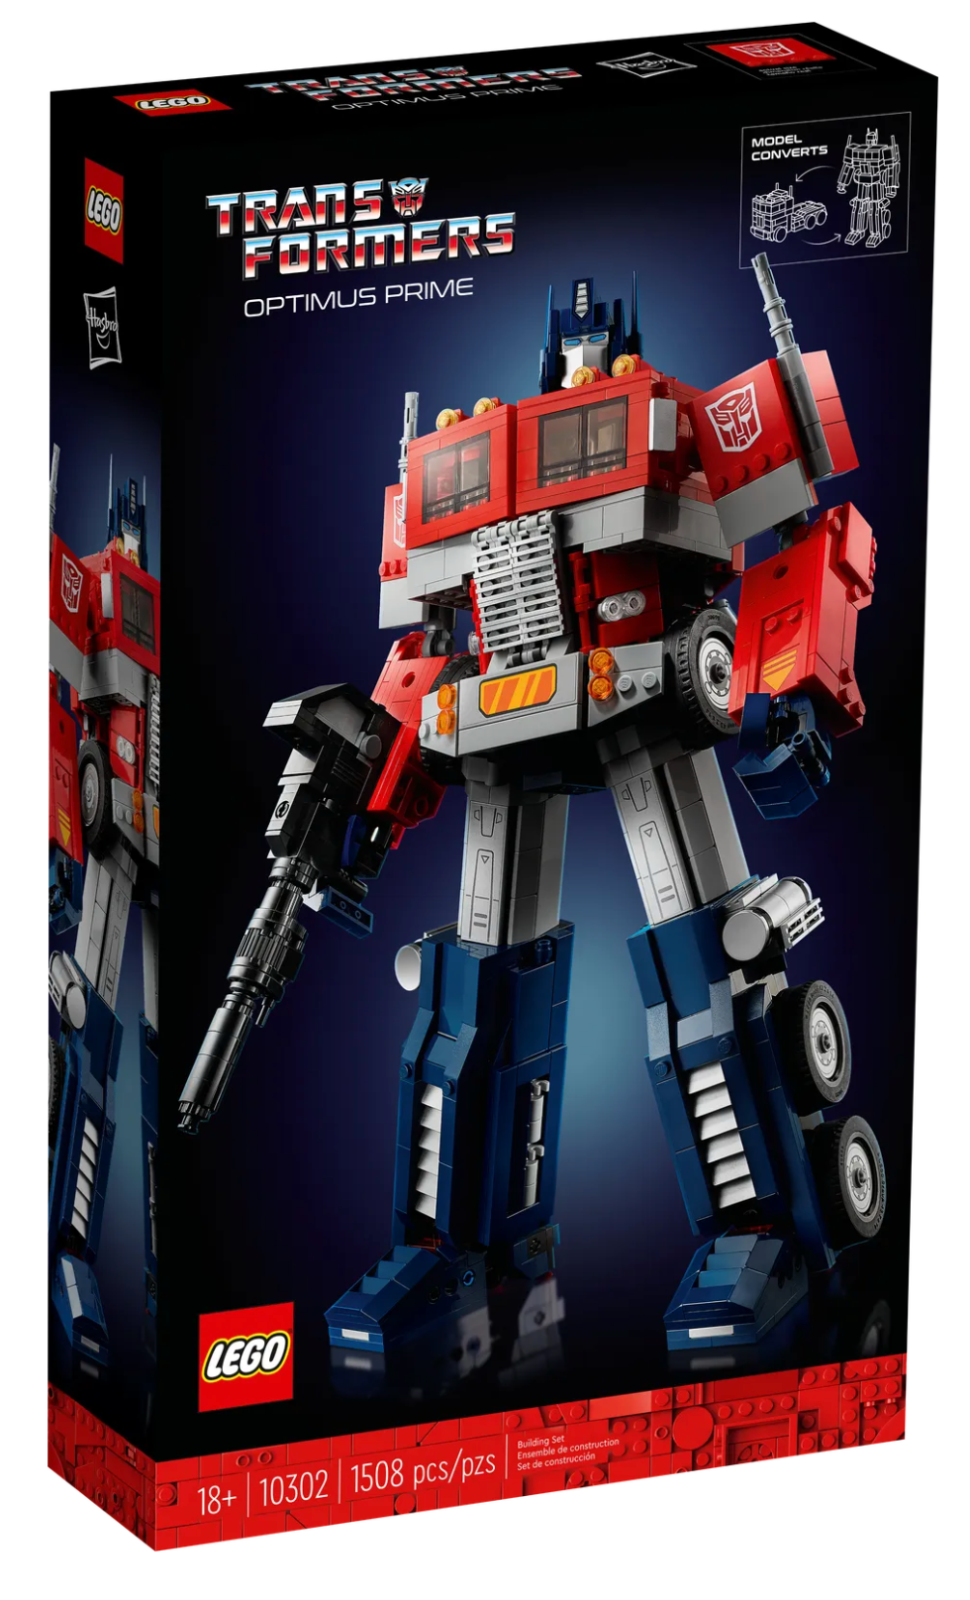 LEGO ICONS EXPERT Transformers Optimus Prime 10302